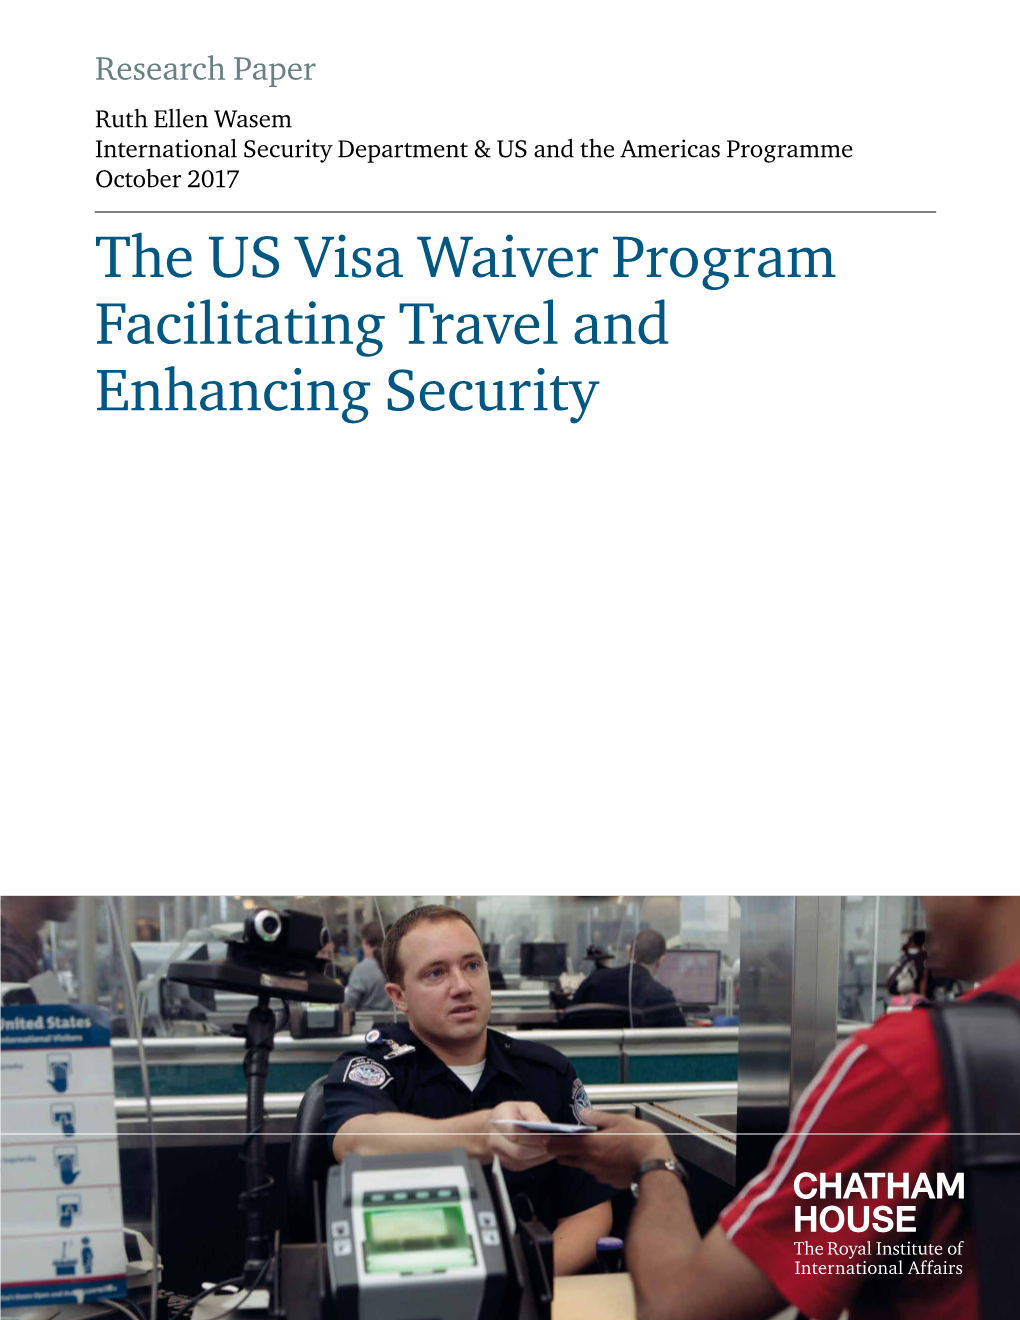 The US Visa Waiver Program Facilitating Travel and Enhancing Security the US Visa Waiver Program: Facilitating Travel and Enhancing Security